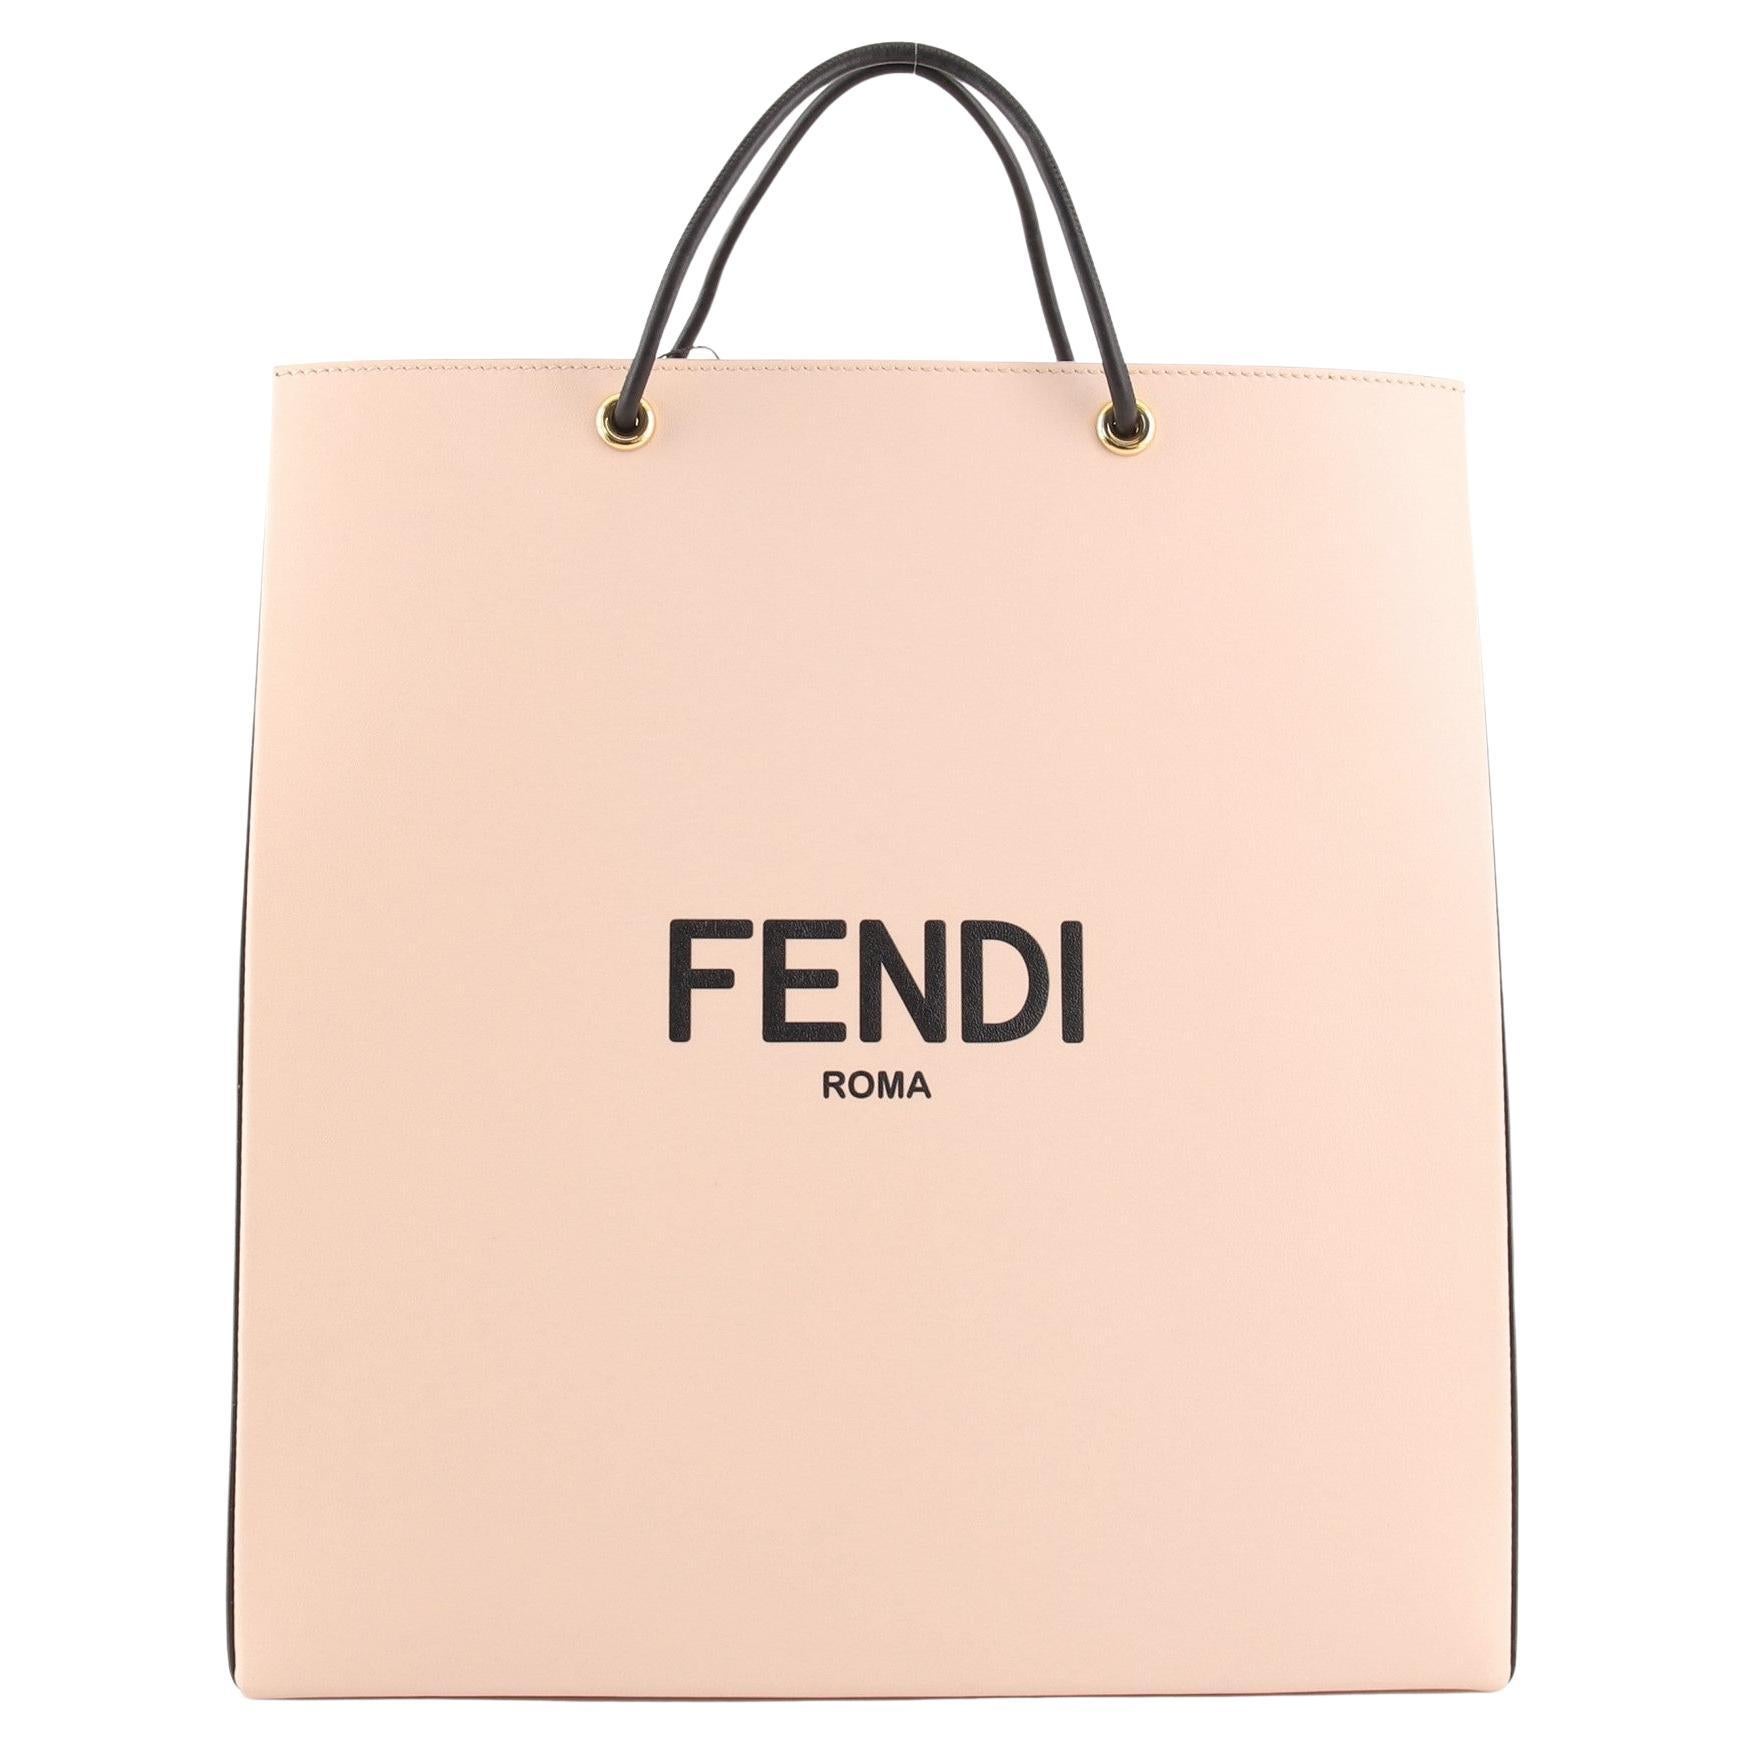 Fendi Pack Shopping Tote Leather Medium